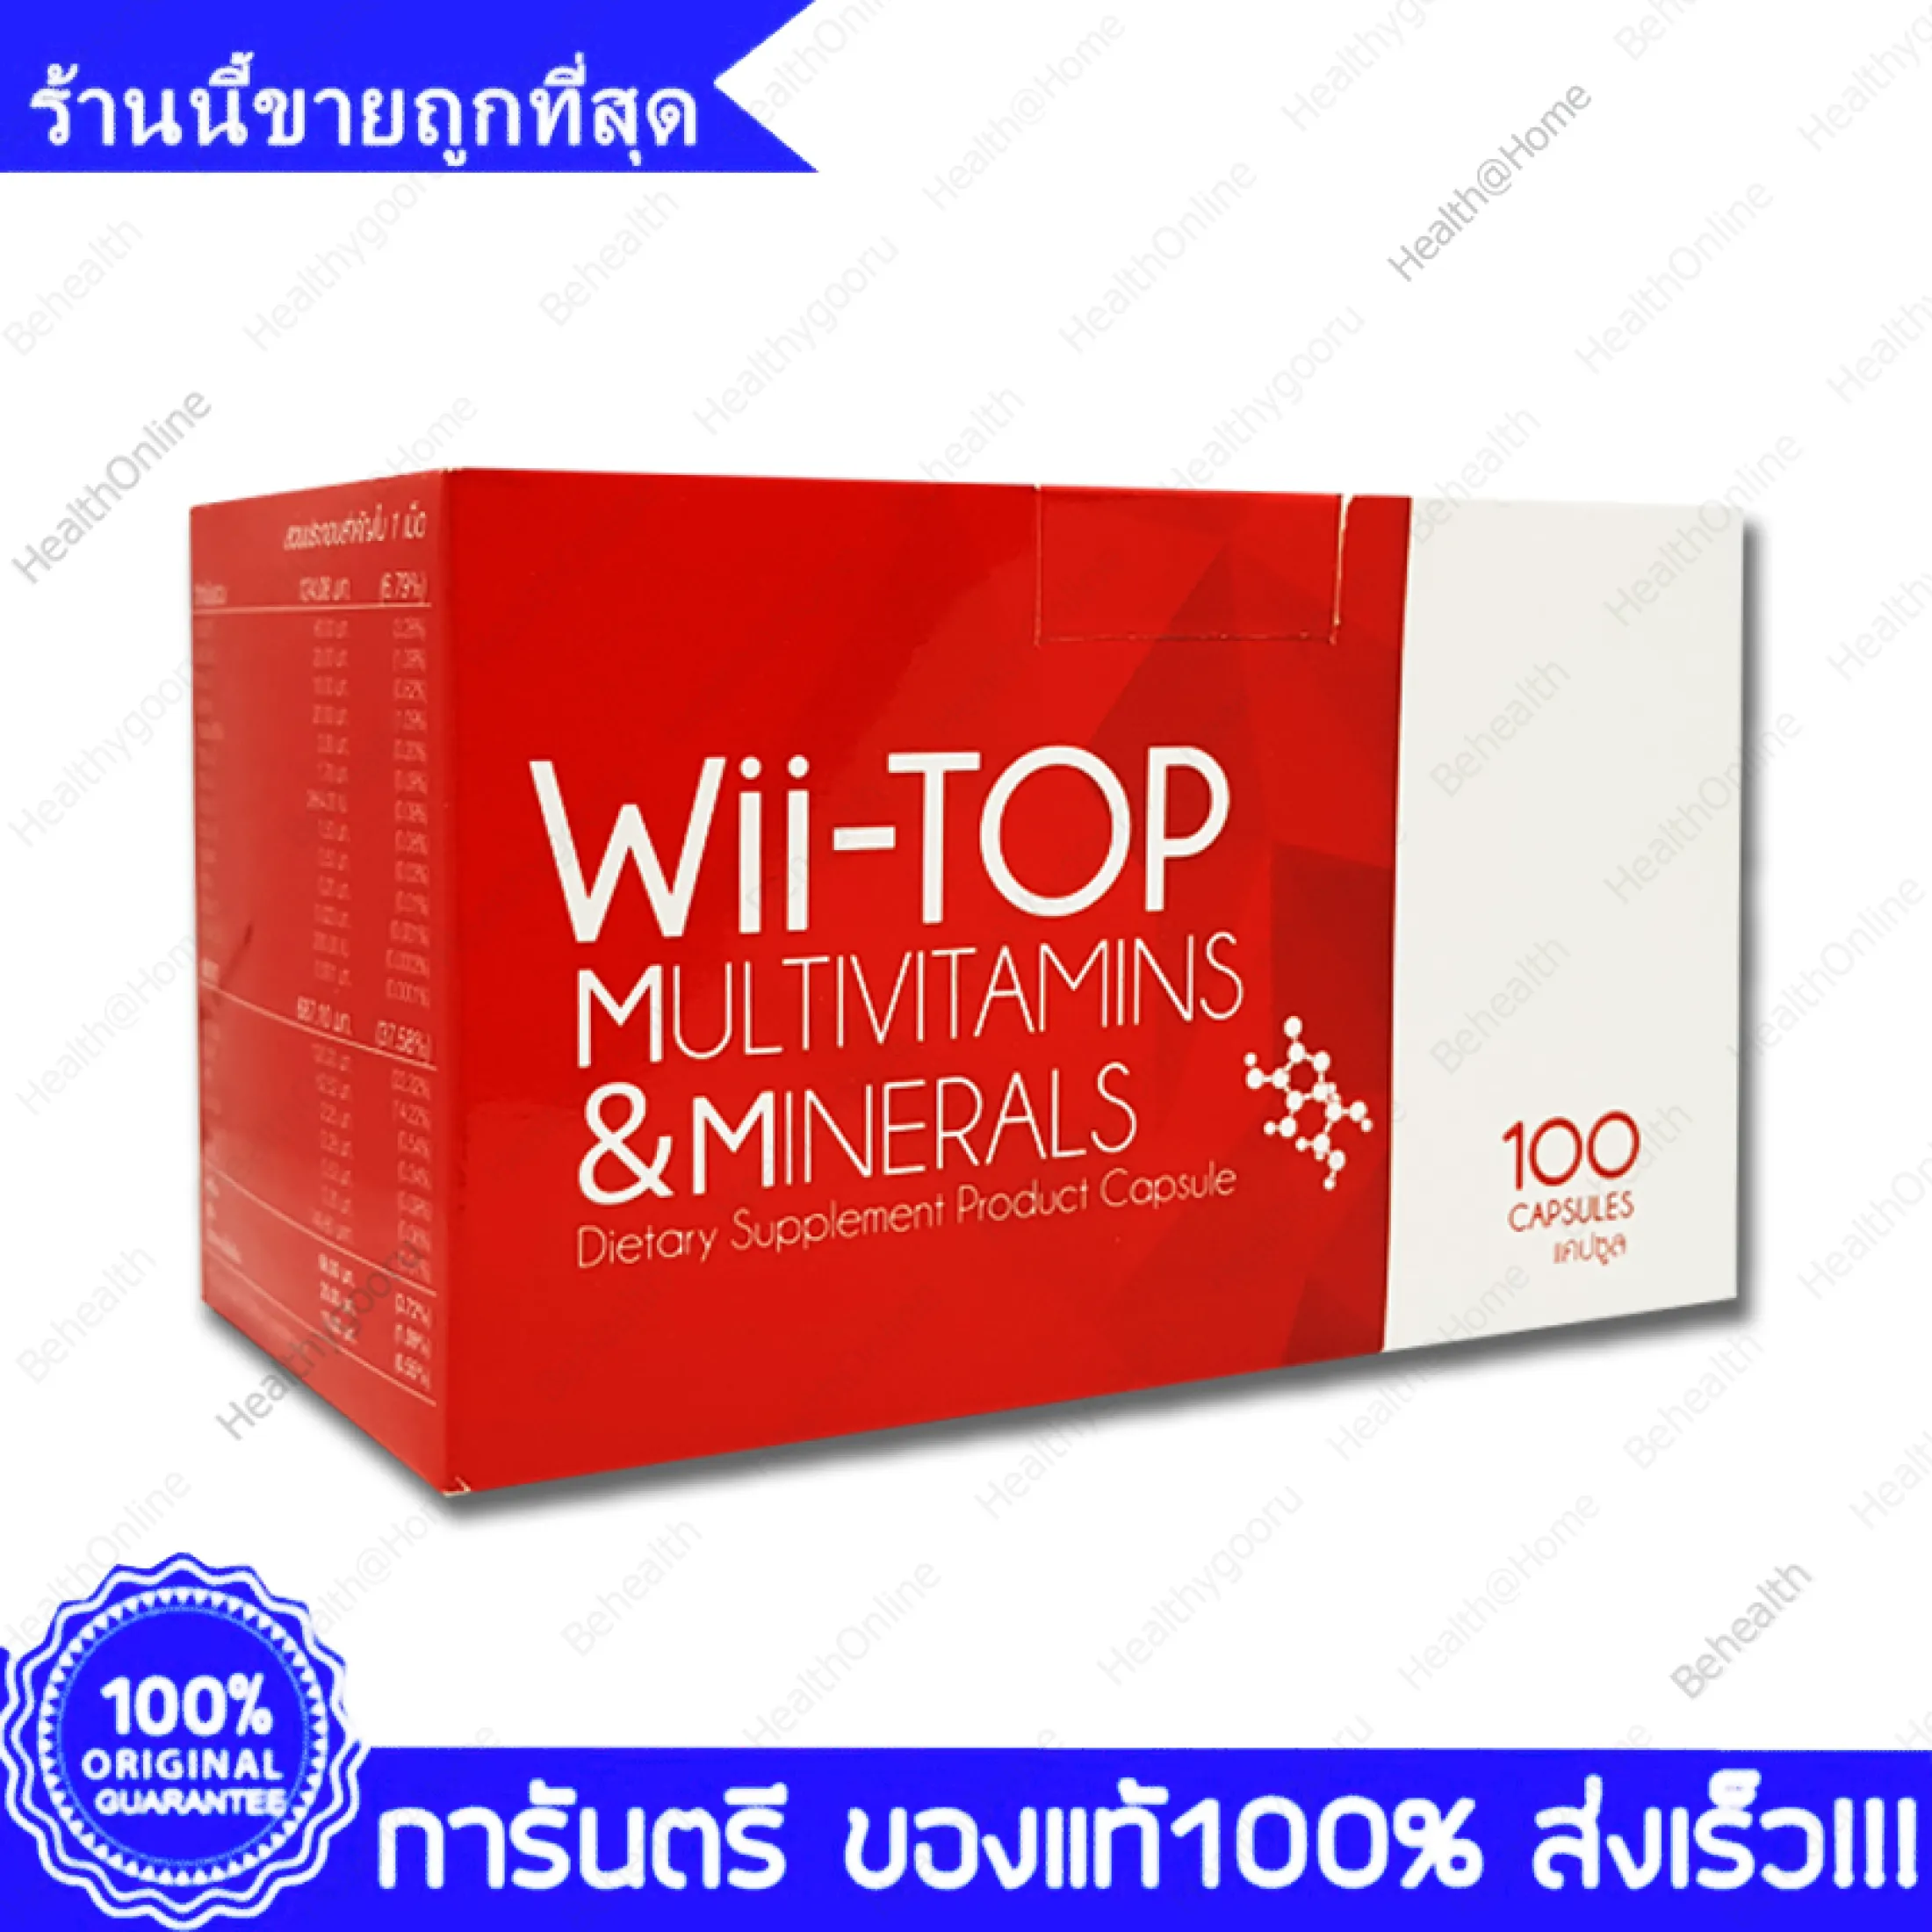 Wii Top Multivitamins Minerals Vi Top ว ท อป ไวทอป ว ตาม นรวม และ แร ธาต 100 Capsules แคปซ ล Lazada Co Th